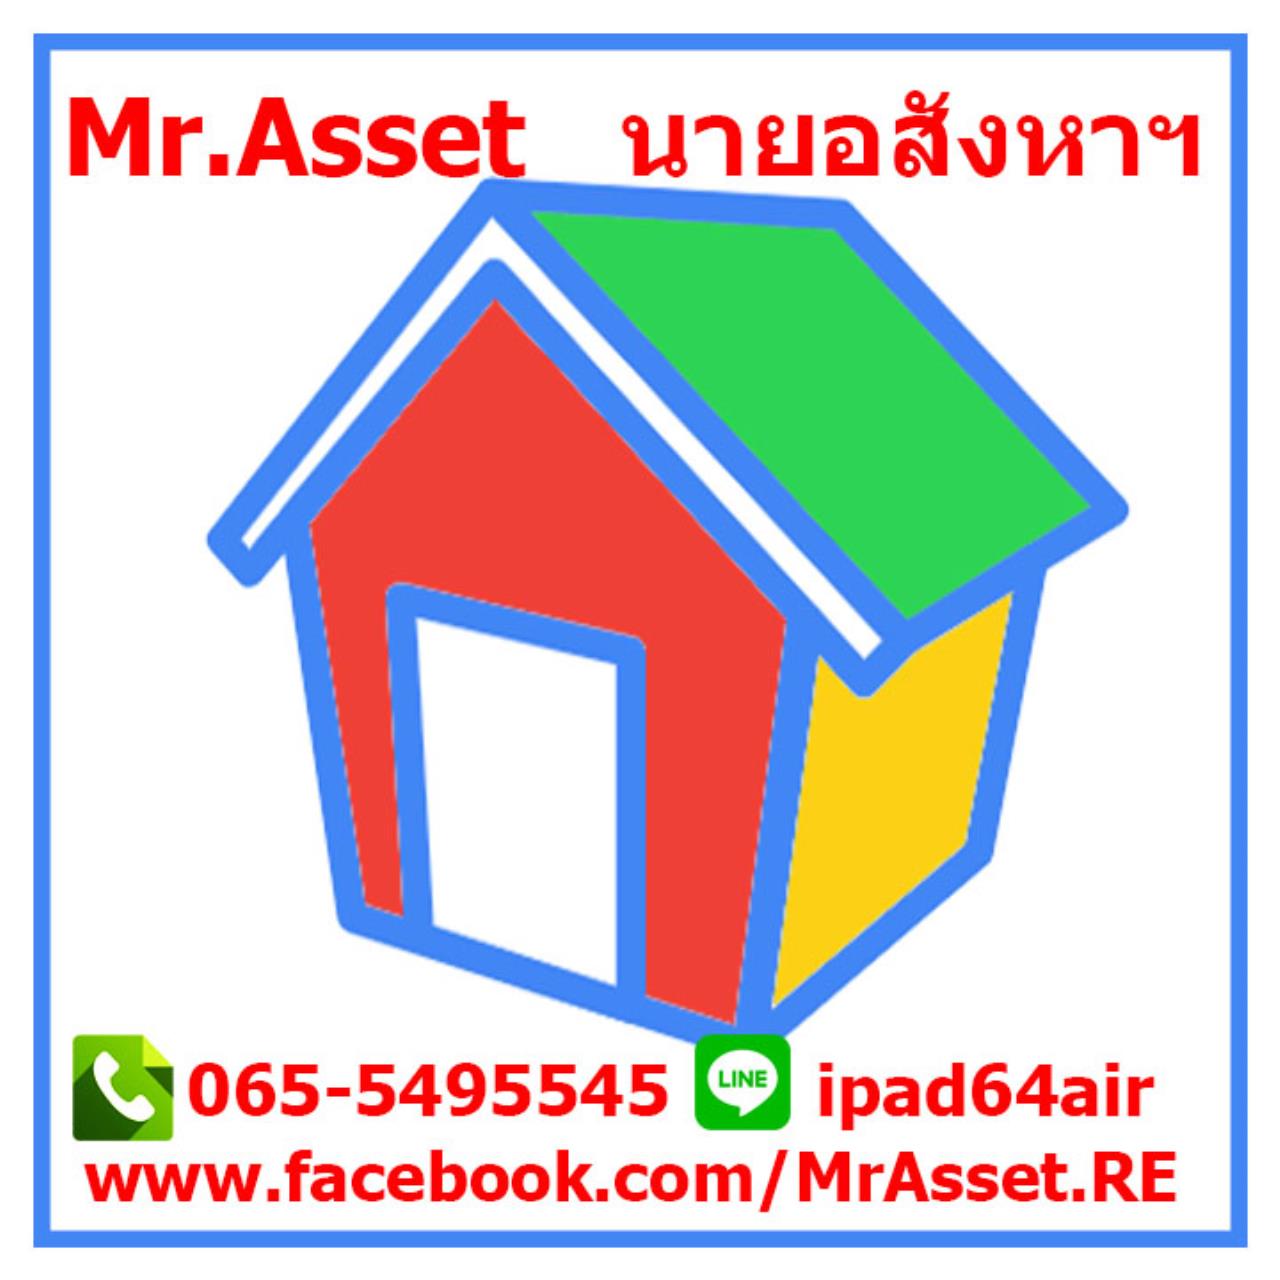 Mr.Asset